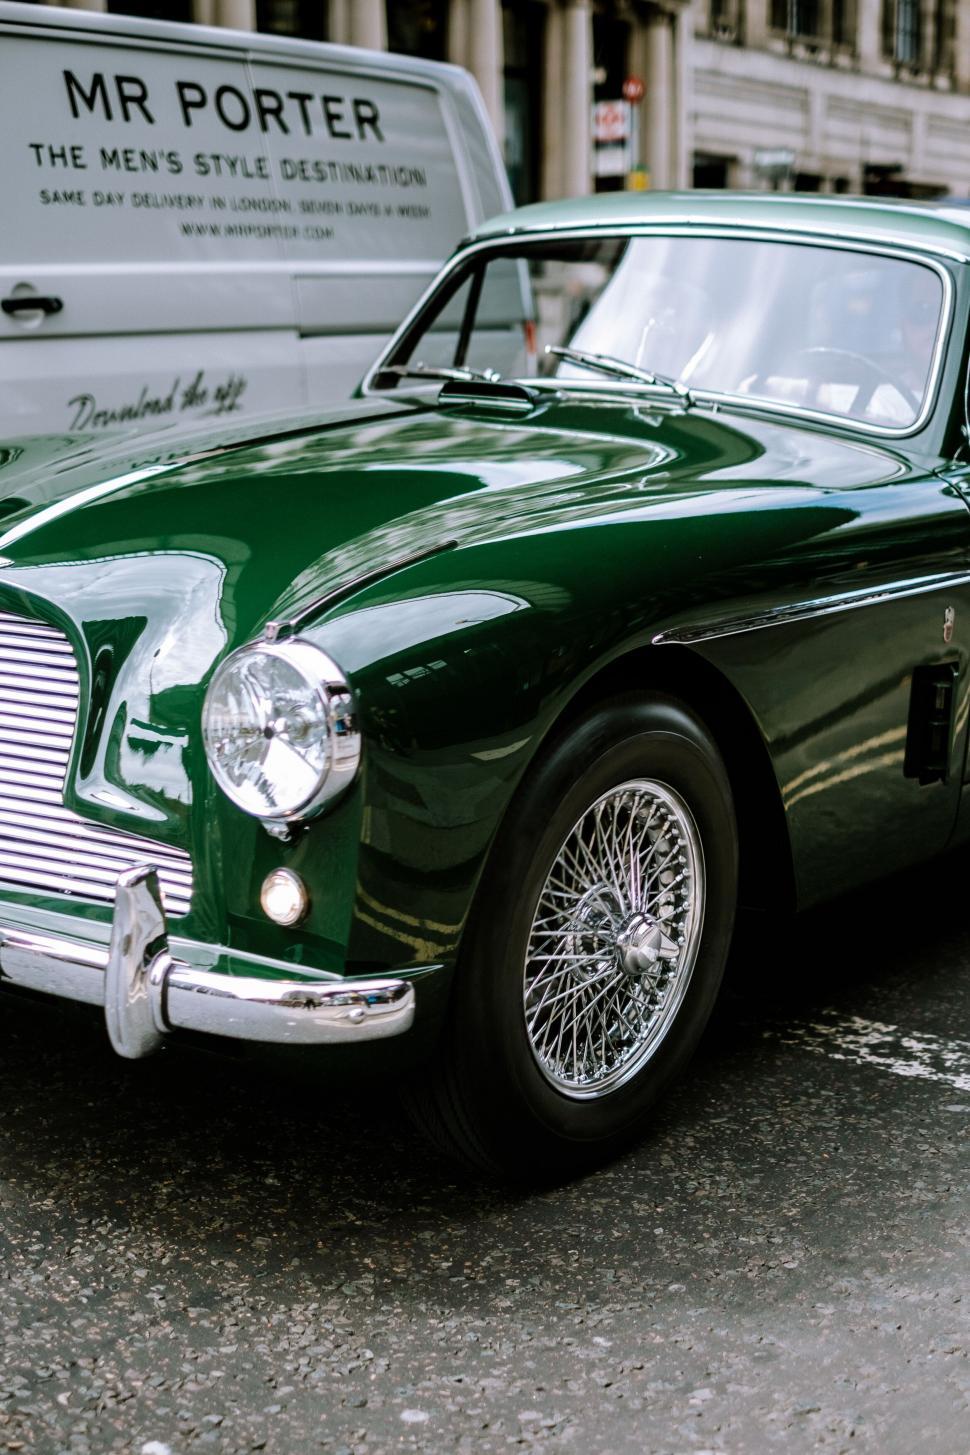 Free Image of Classic green Aston Martin on urban street 